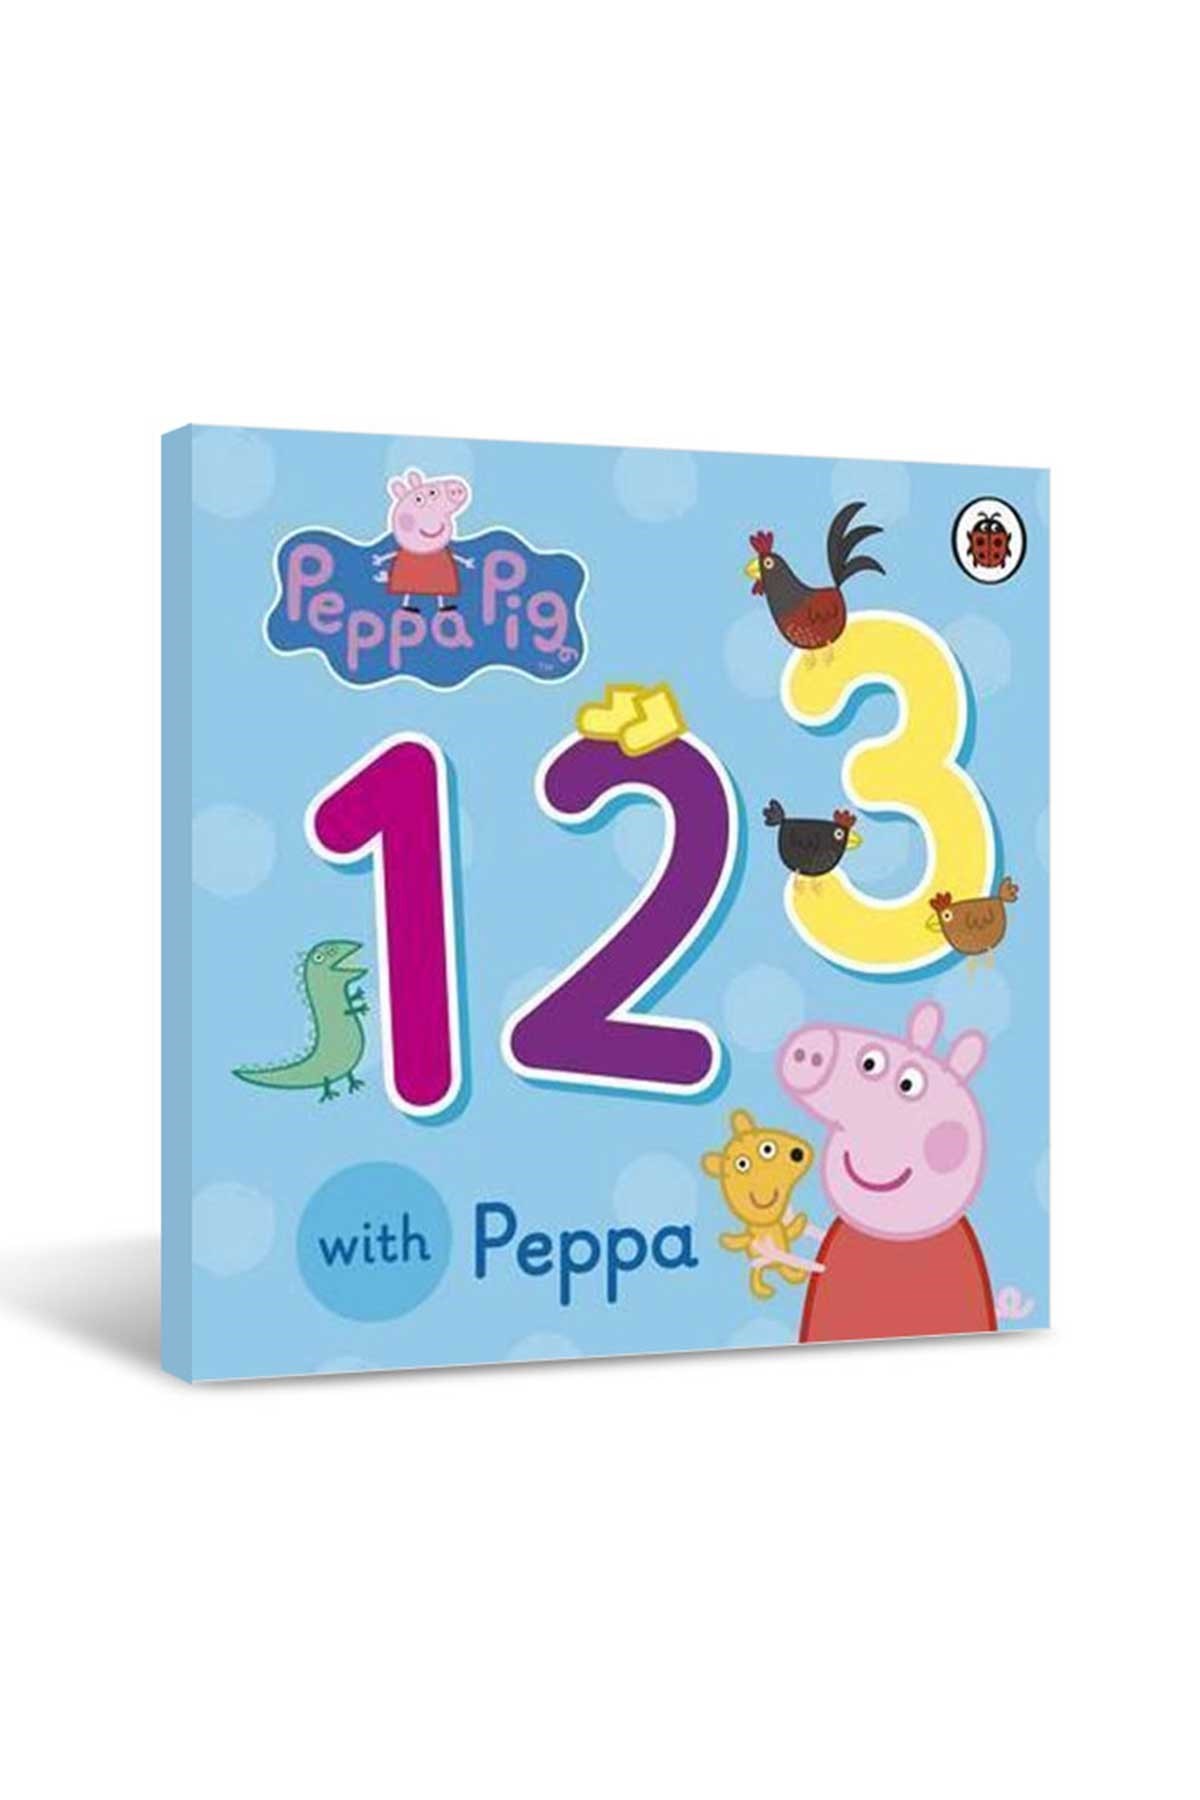 Peppa Pig: 123 With Peppa